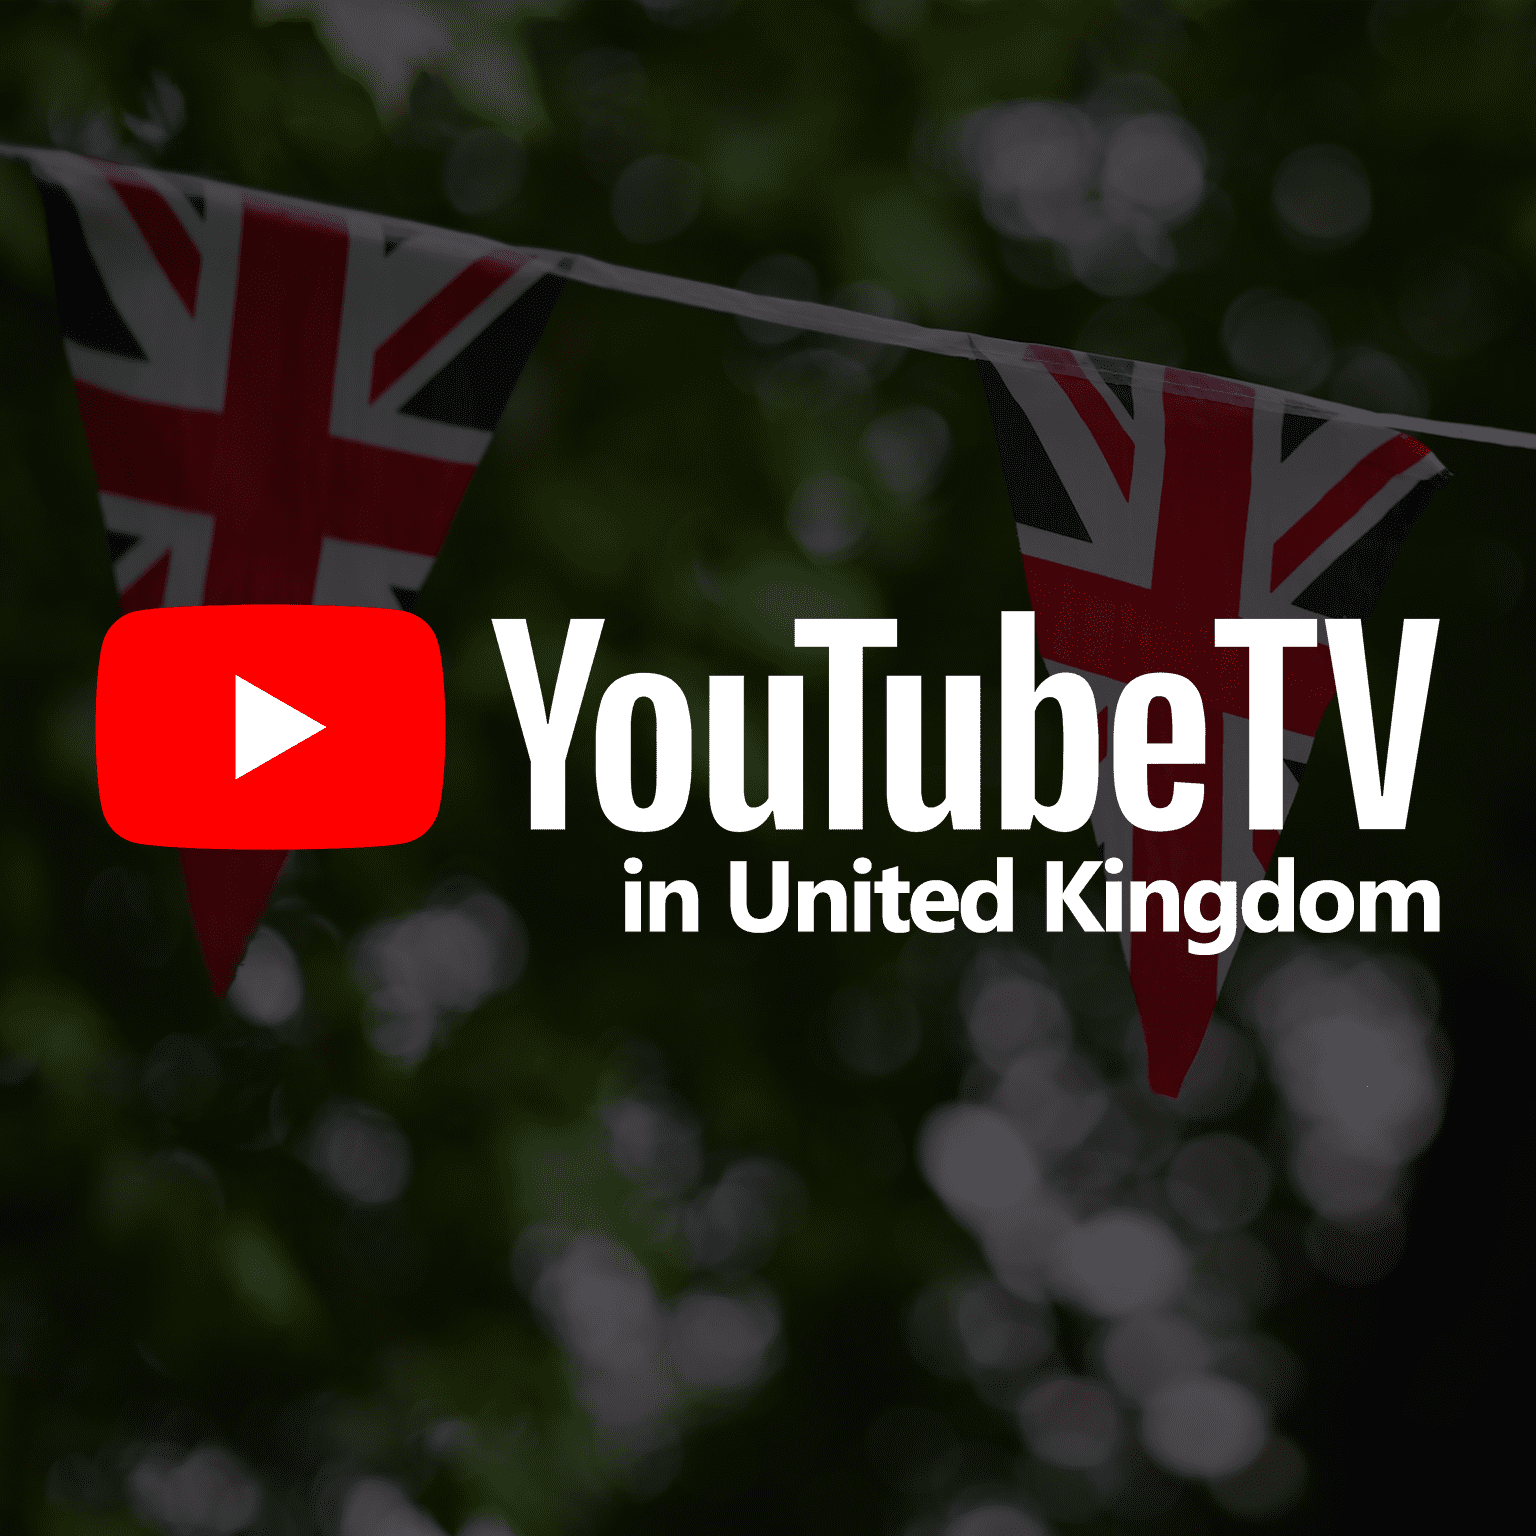 Watch YouTube TV in UK